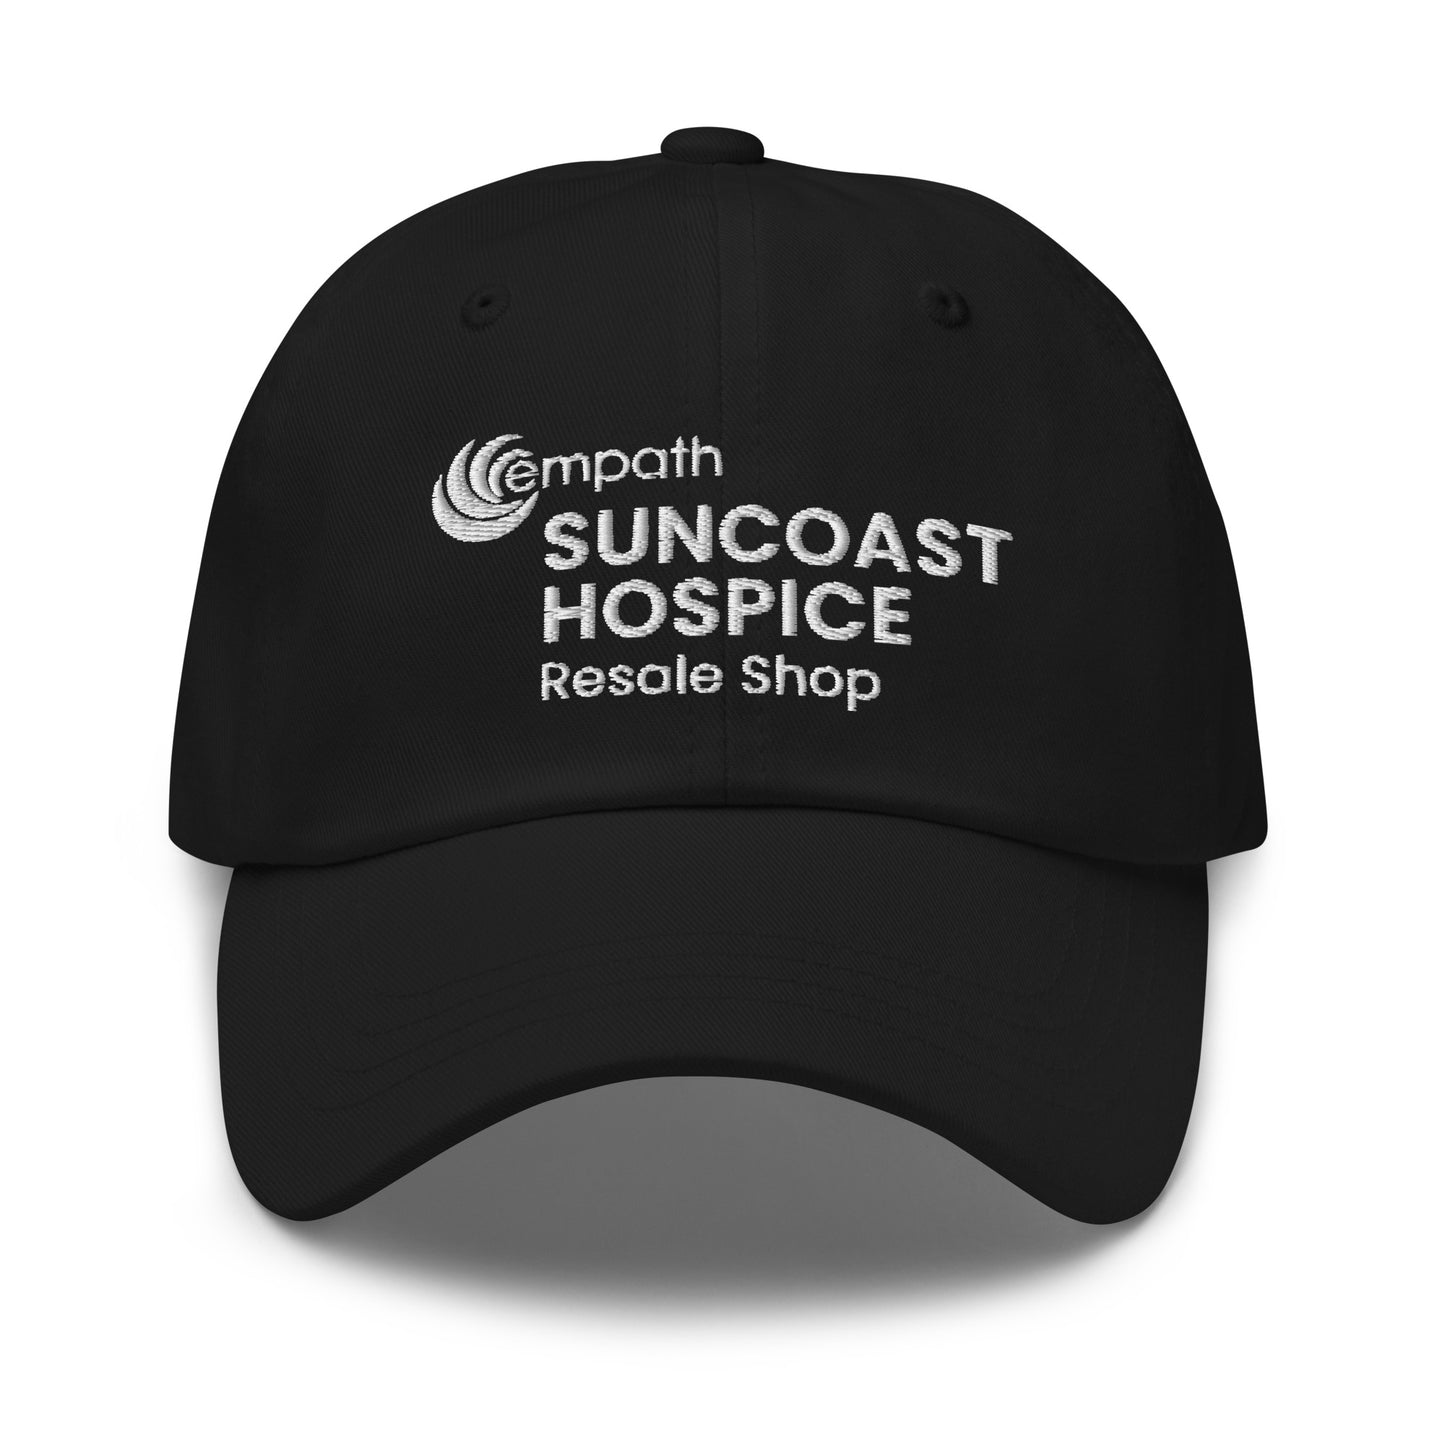 Classic Dad hat - Suncoast Hospice Resale Shop